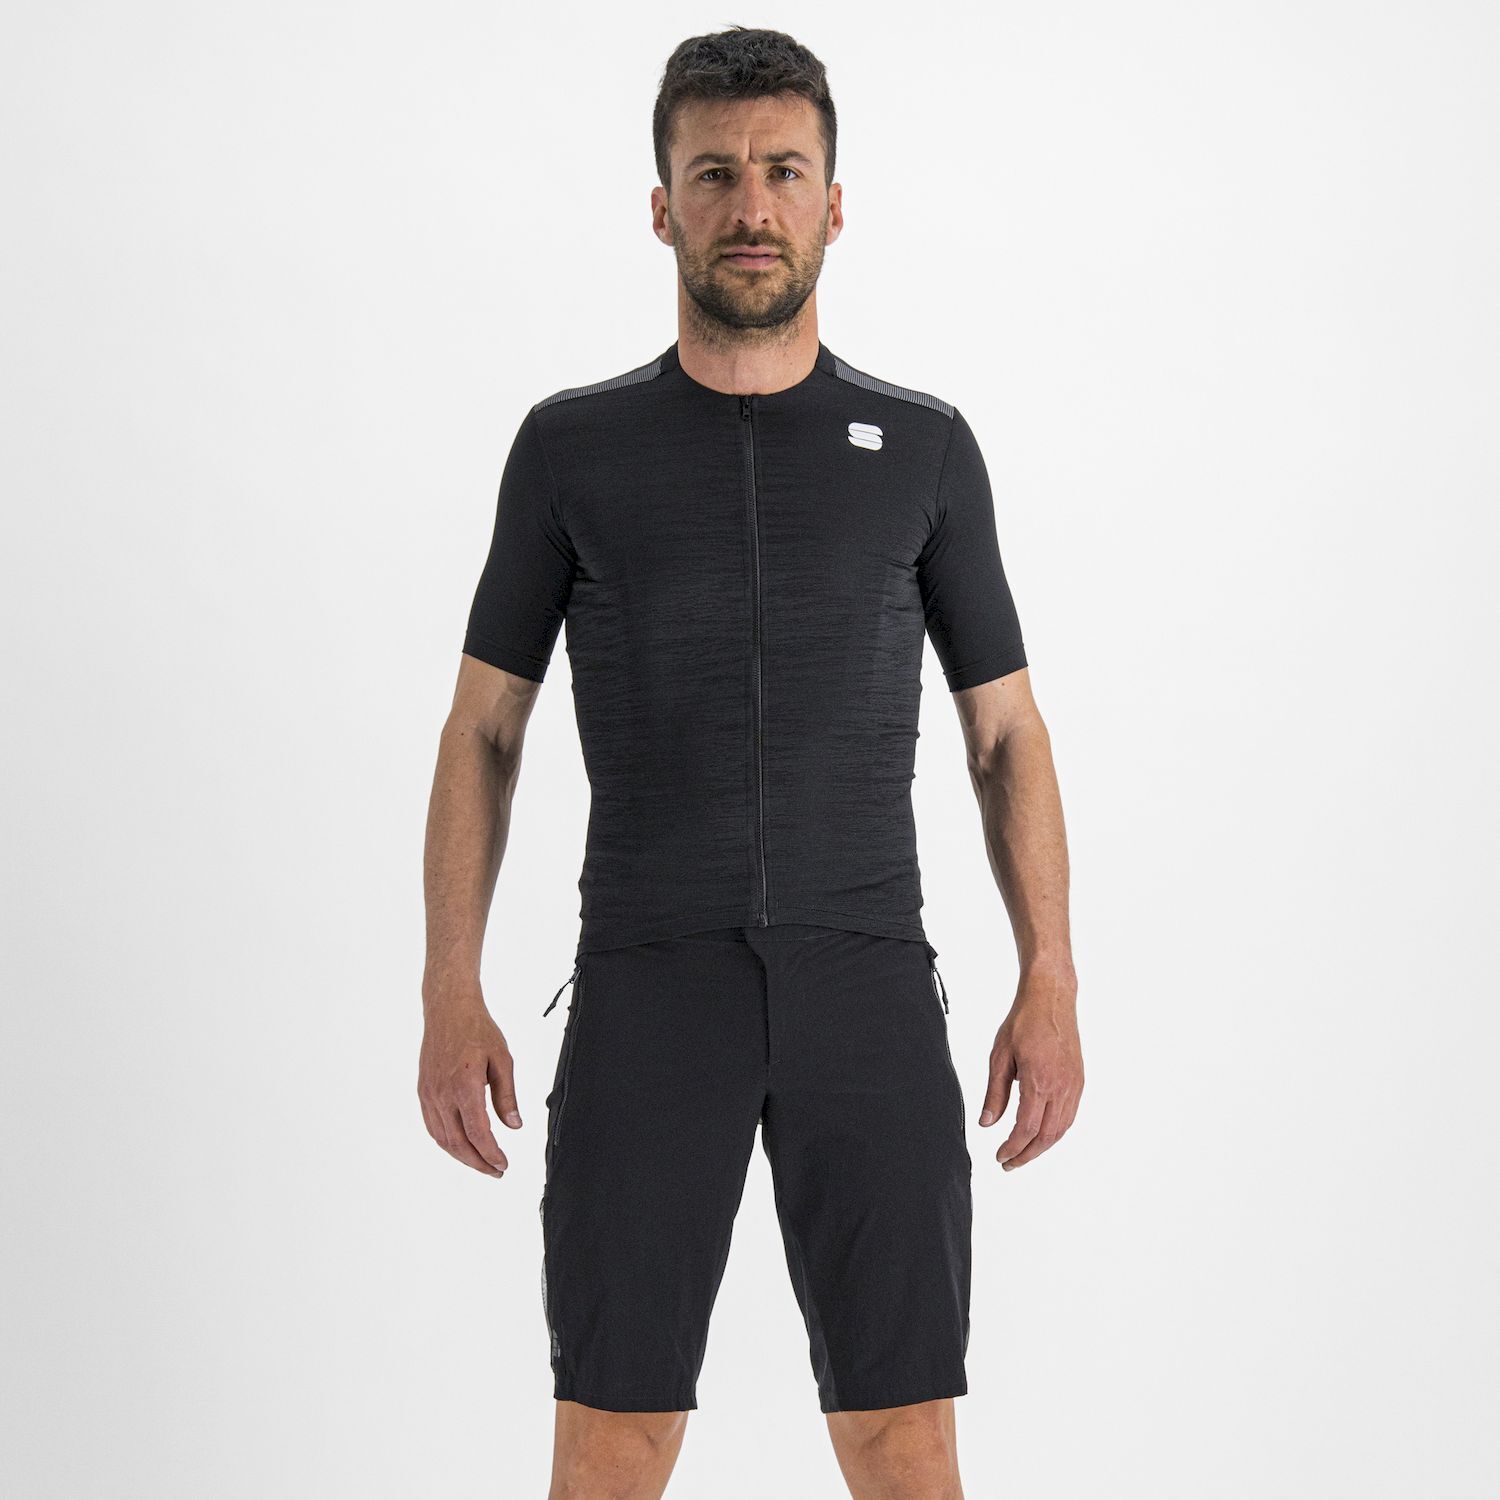 Sportful Supergiara Overshort - Cycling shorts - Men's